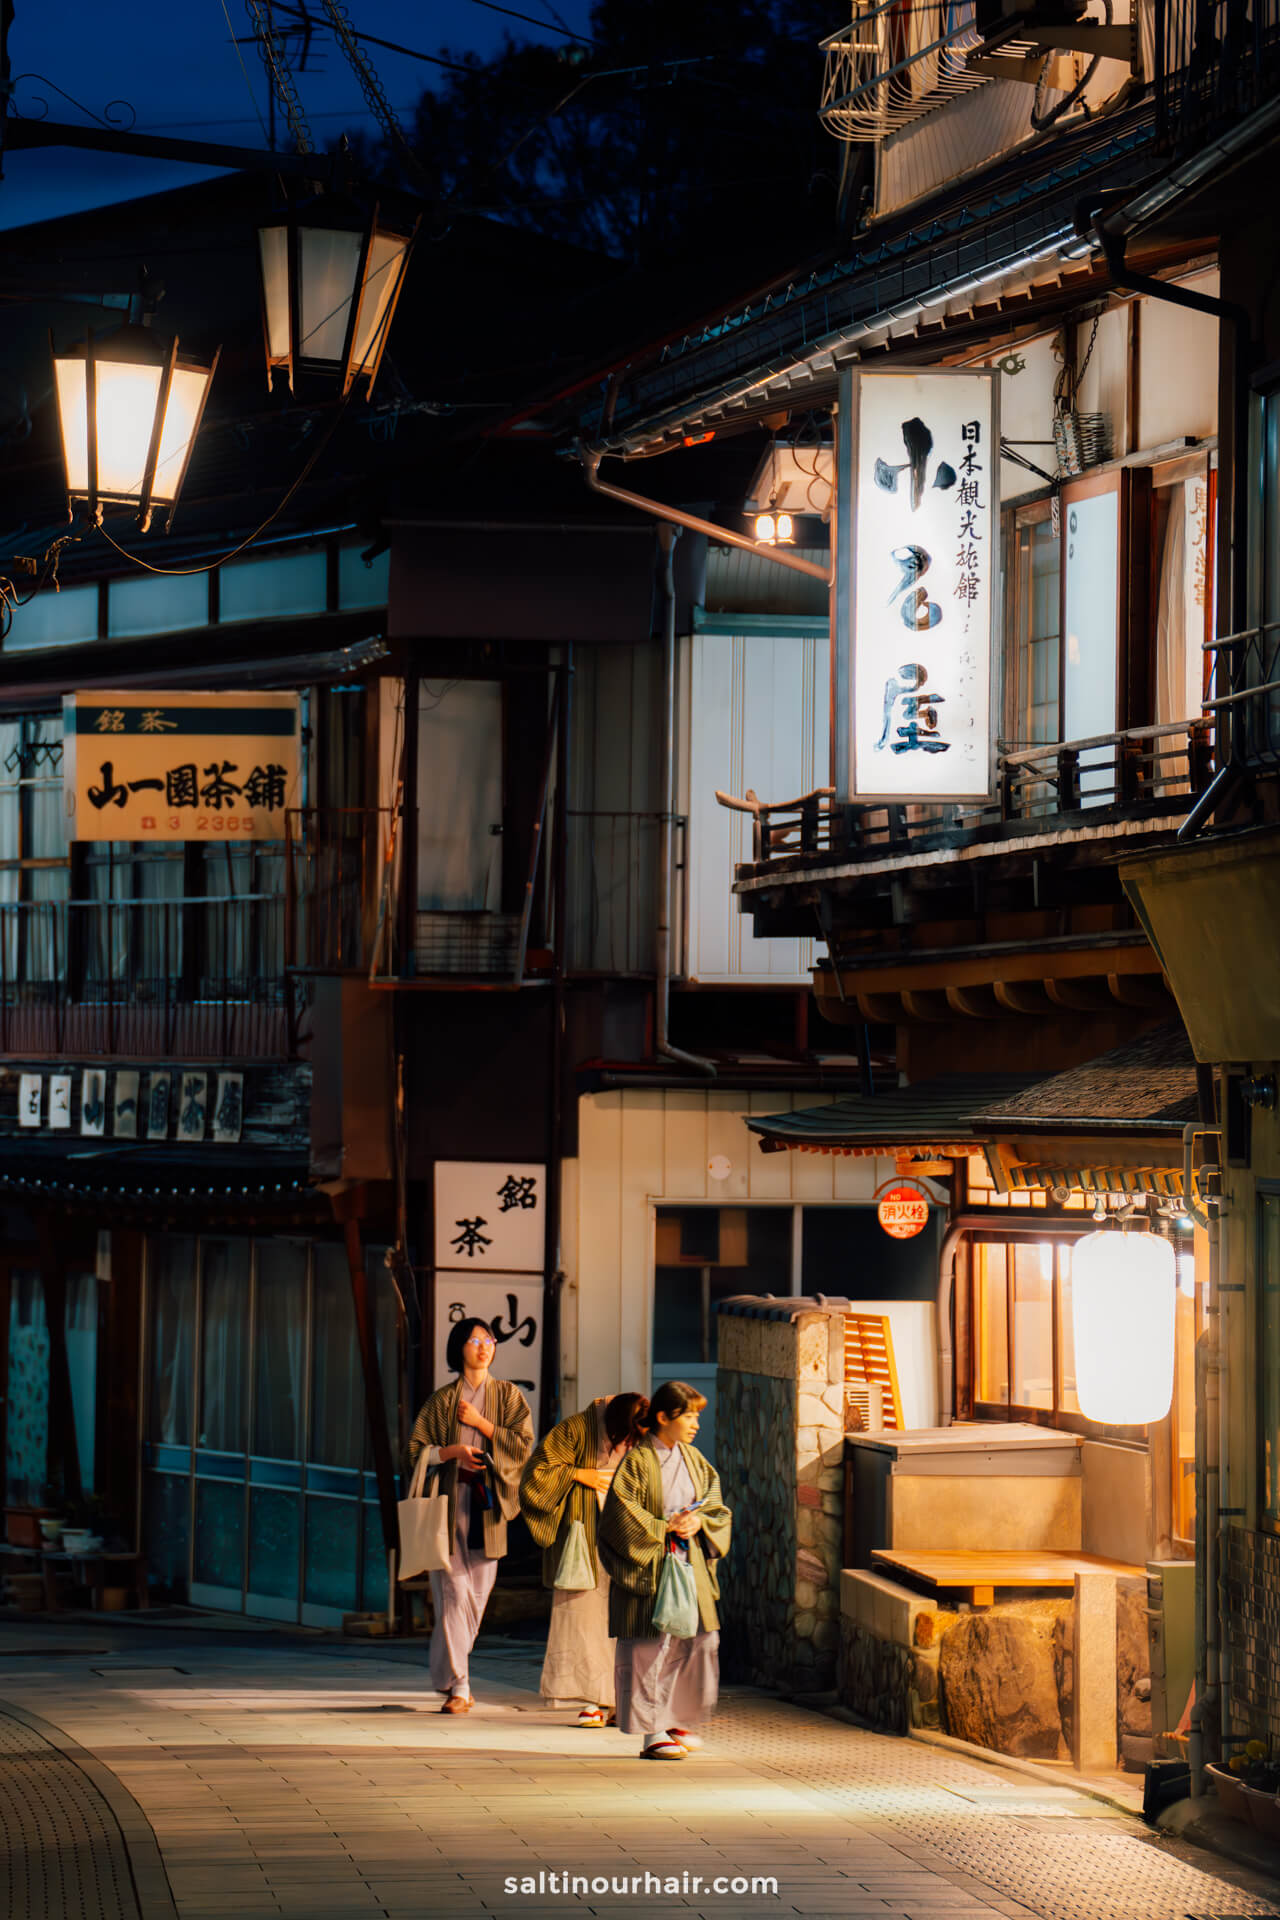 things to do in japan visit Japanese onsen